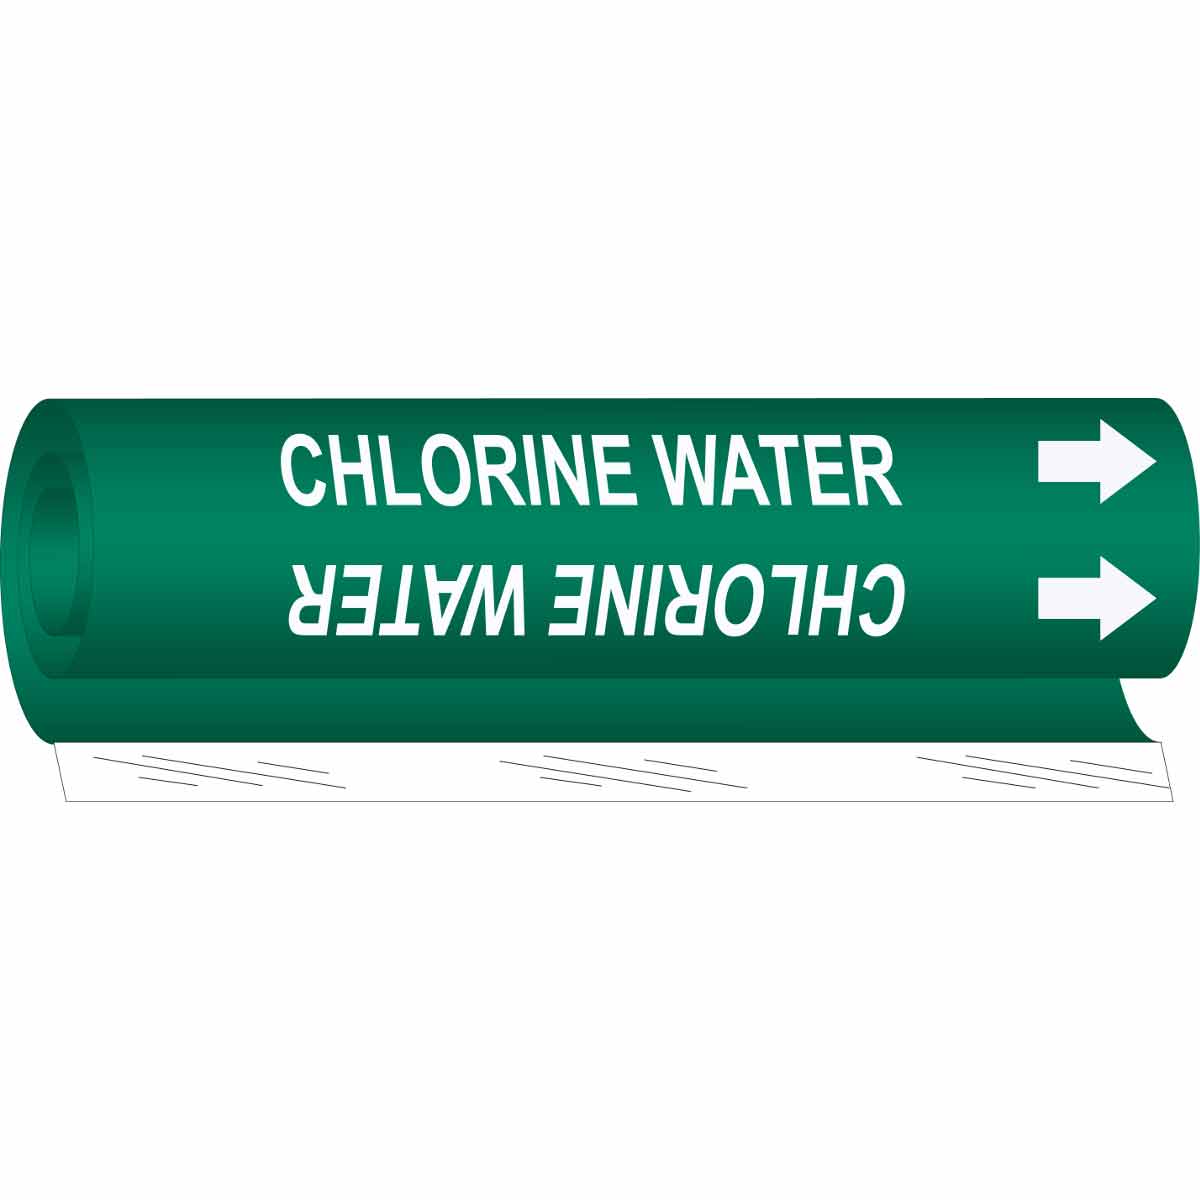 CHLORINE WATER WHITE / GREEN